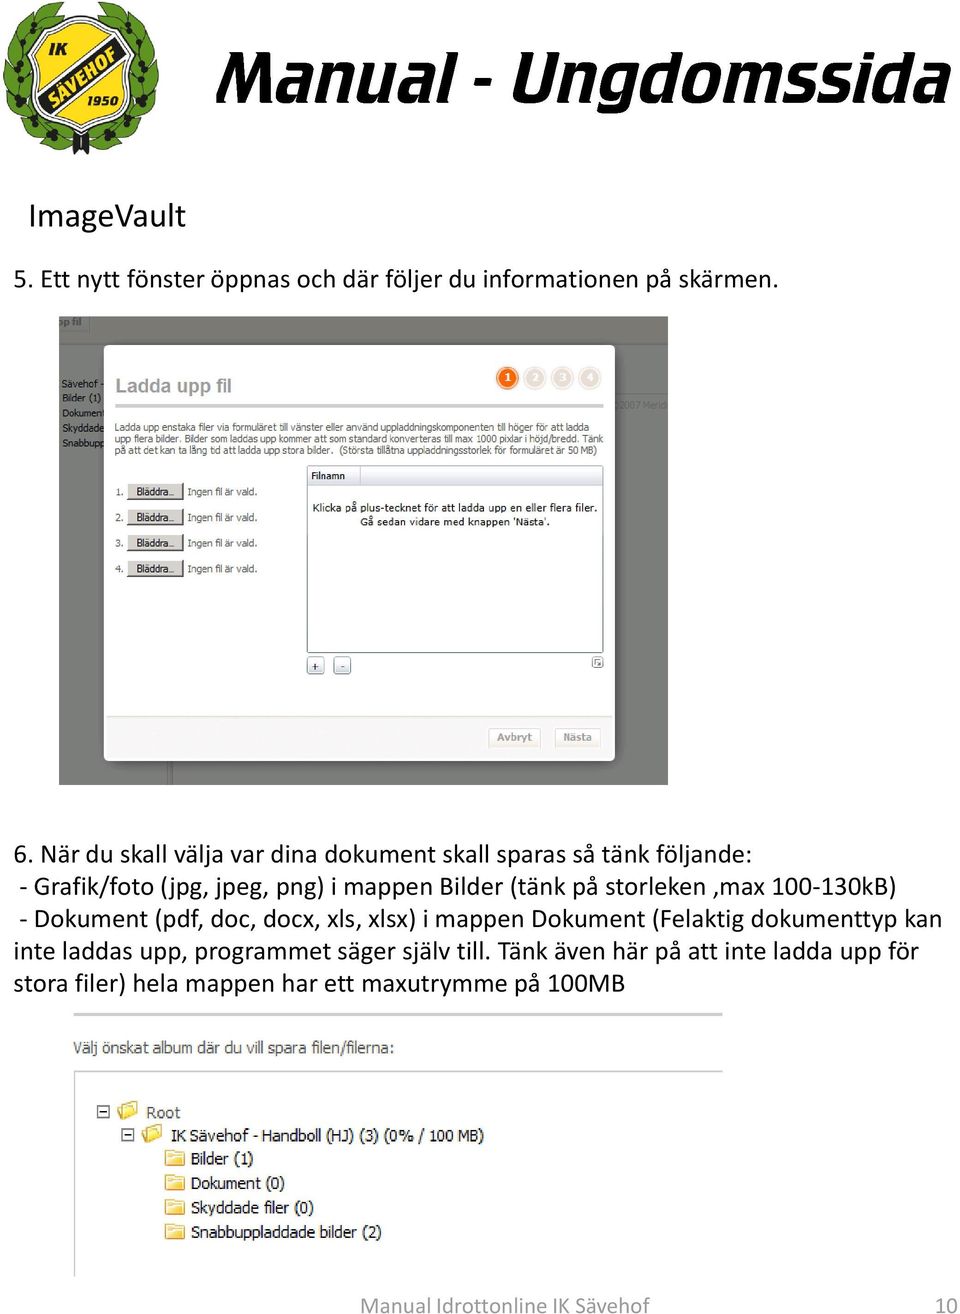 på storleken,max 100-130kB) - Dokument (pdf, doc, docx, xls, xlsx) i mappen Dokument (Felaktig dokumenttyp kan inte laddas